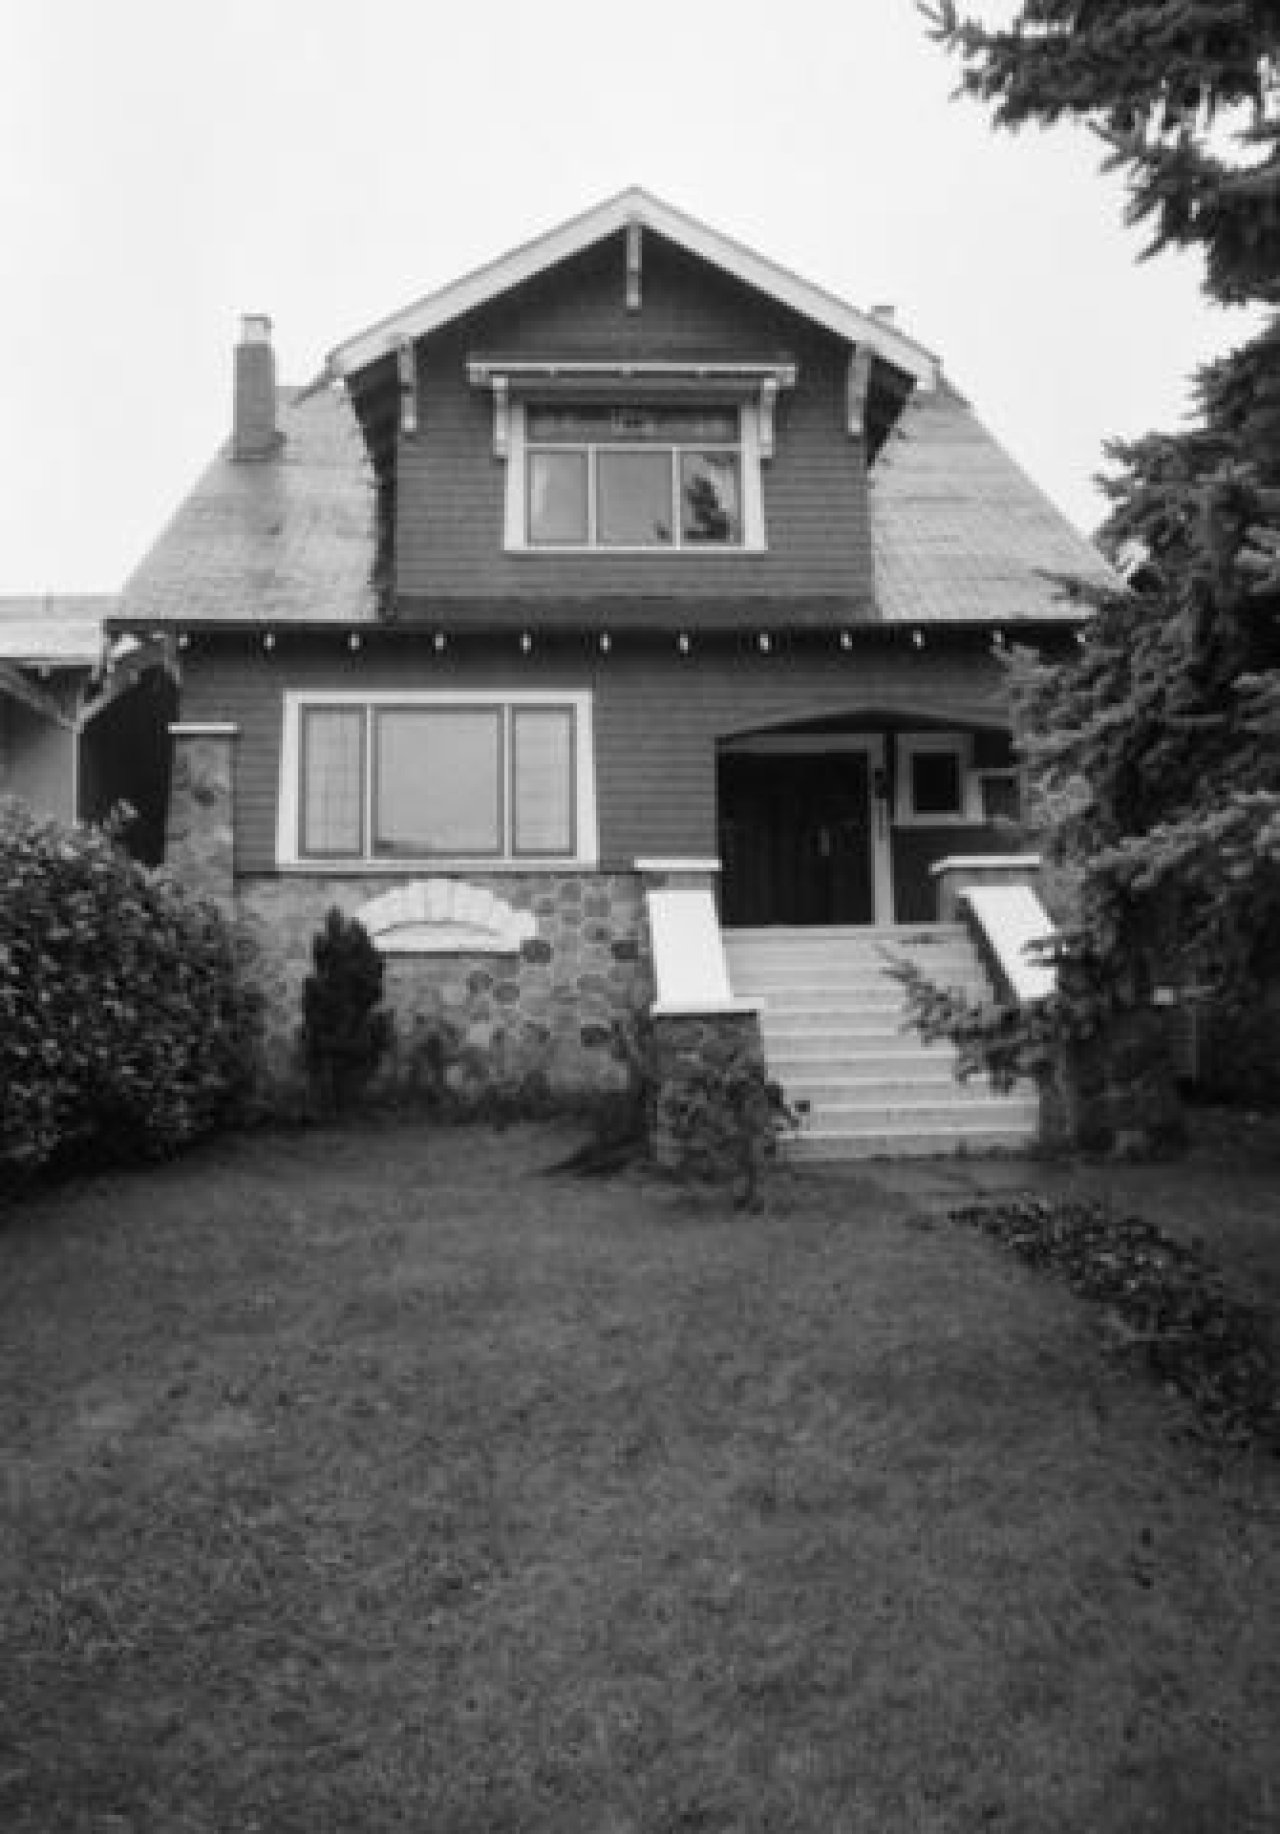 3242 West 2nd Avenue c. 1985
Source: City of Vancouver Archives Item : CVA 790-1563 - 3242 West 2nd Avenue